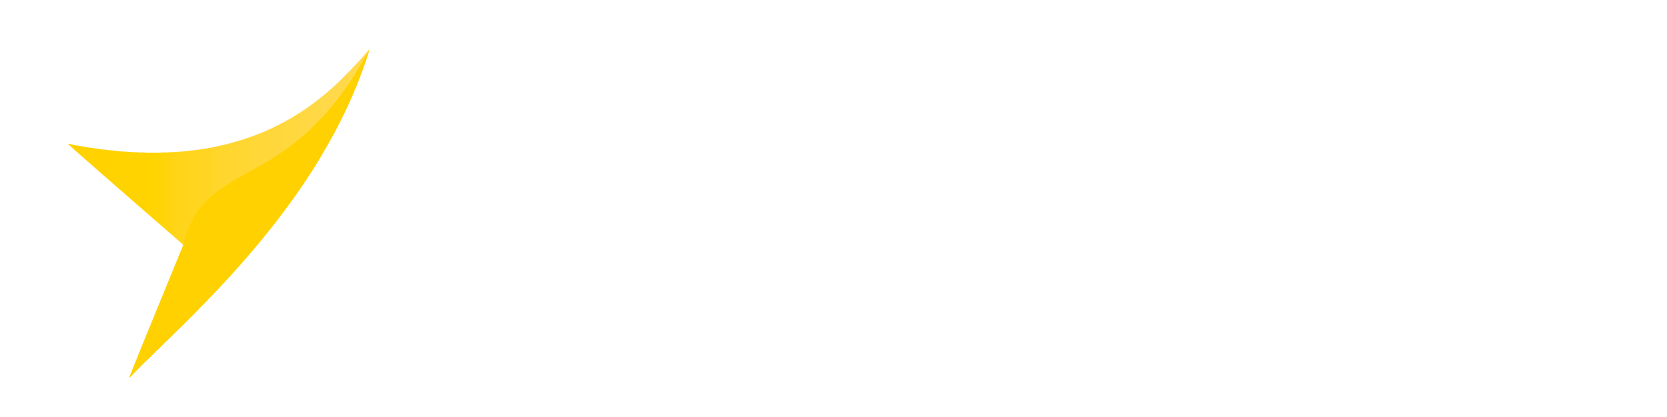 BitcoinVN logo